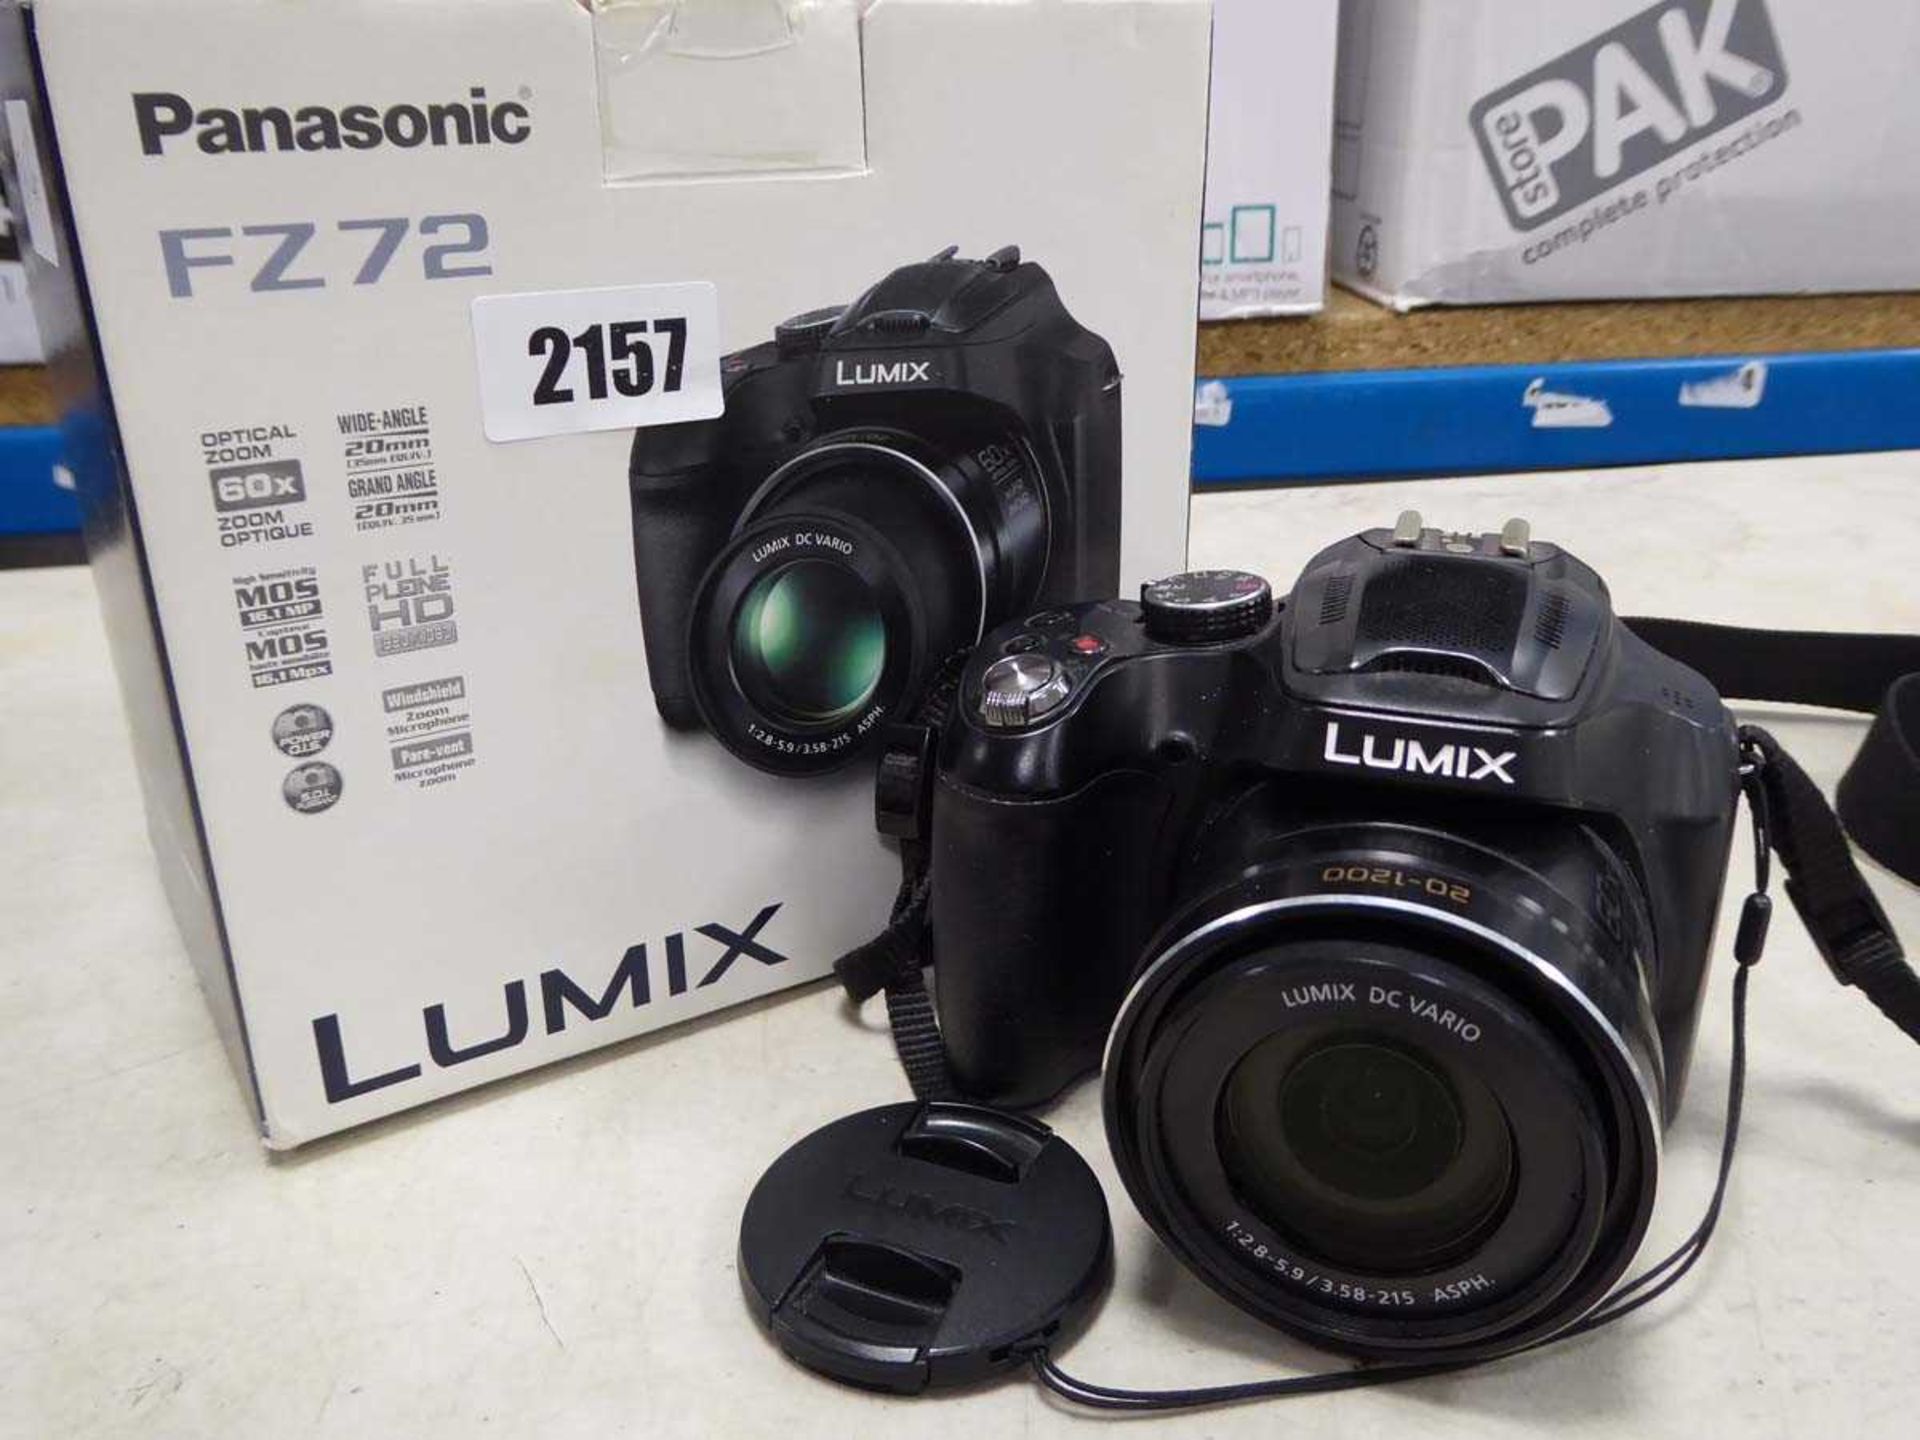 Panasonic FZ72 bridge camera